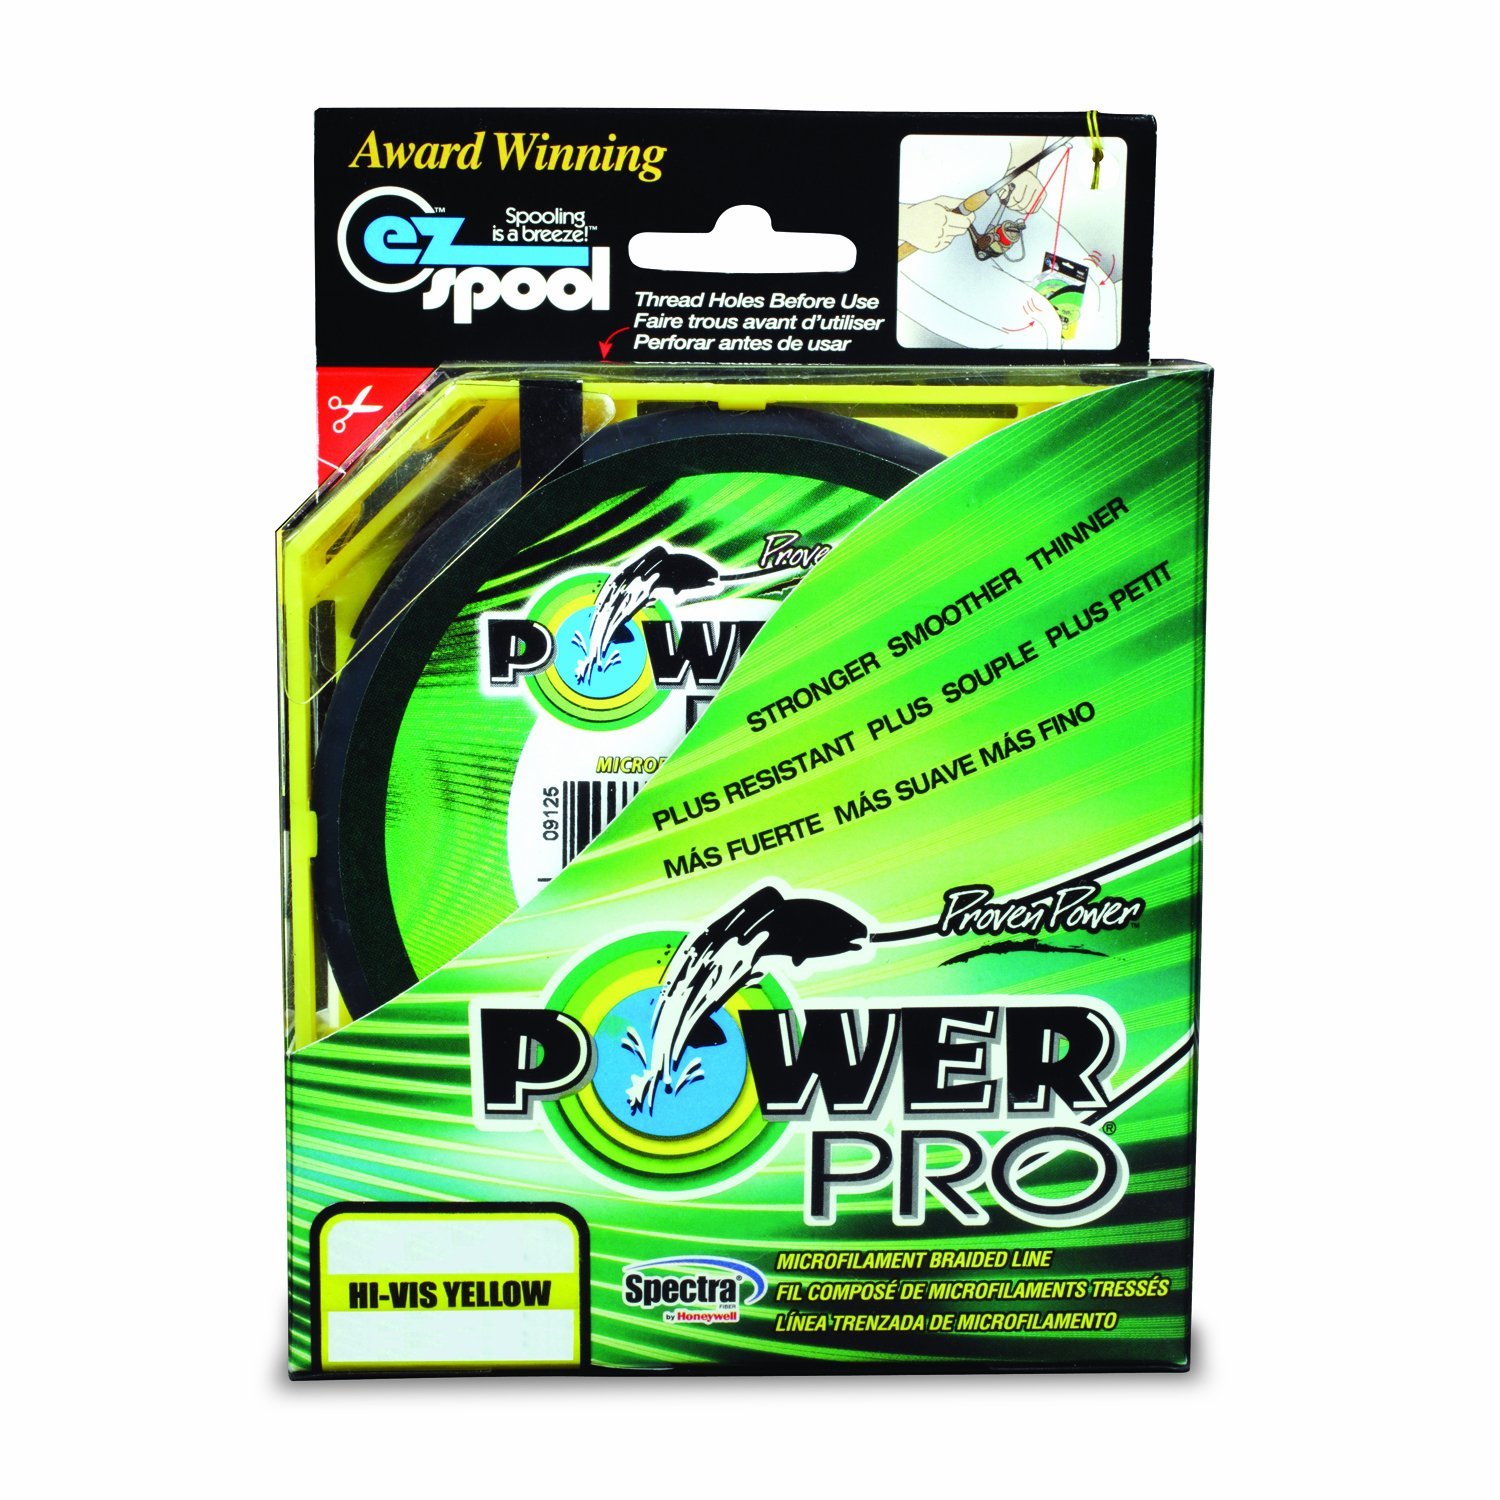 Power Pro PowerPro Braided Line Hi-Vis Yellow 300 yds. - 20 lb. Test